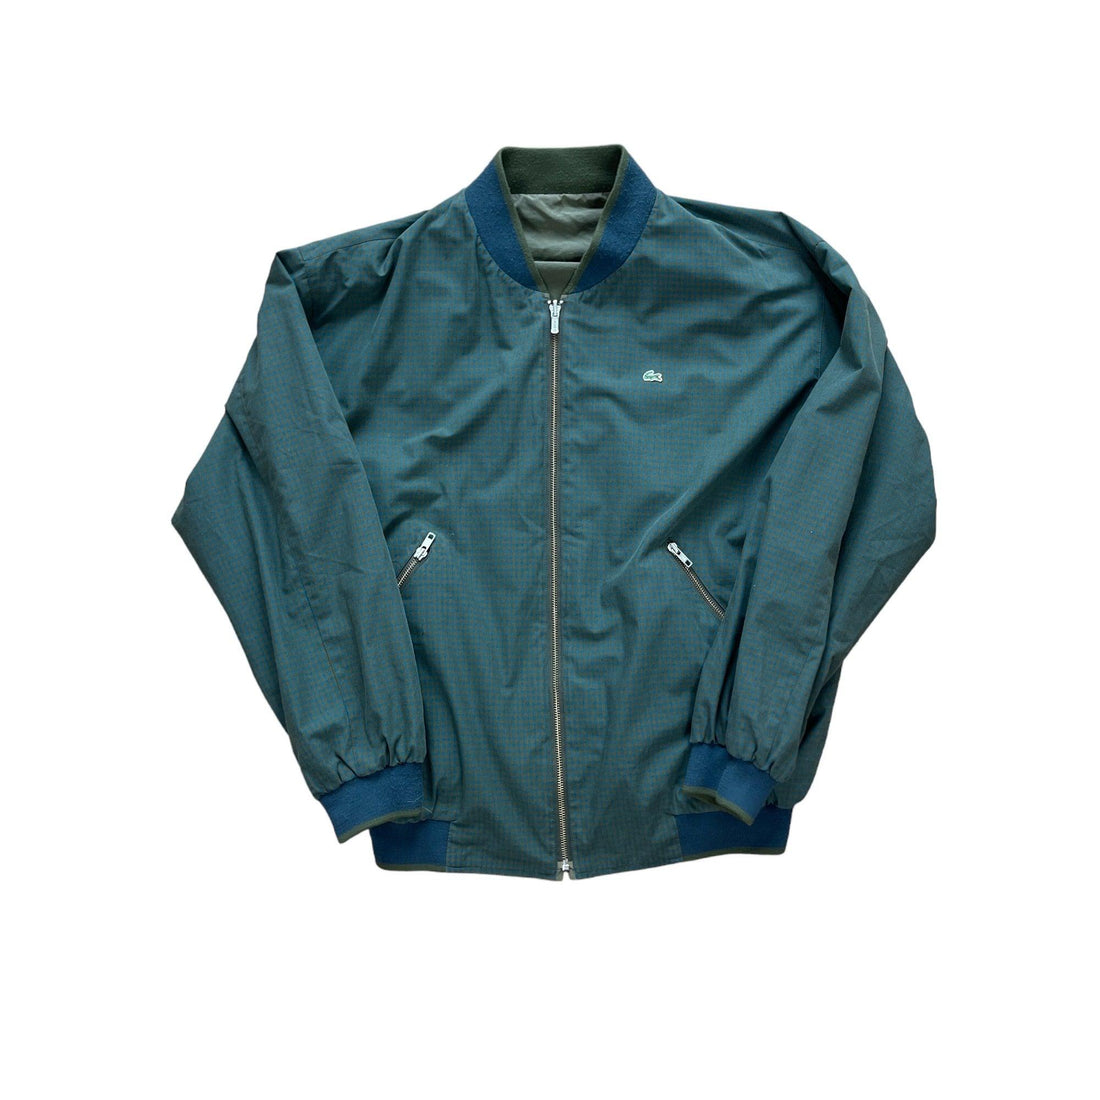 Vintage 90s Green Lacoste Reversible Bomber Jacket - Medium - The Streetwear Studio